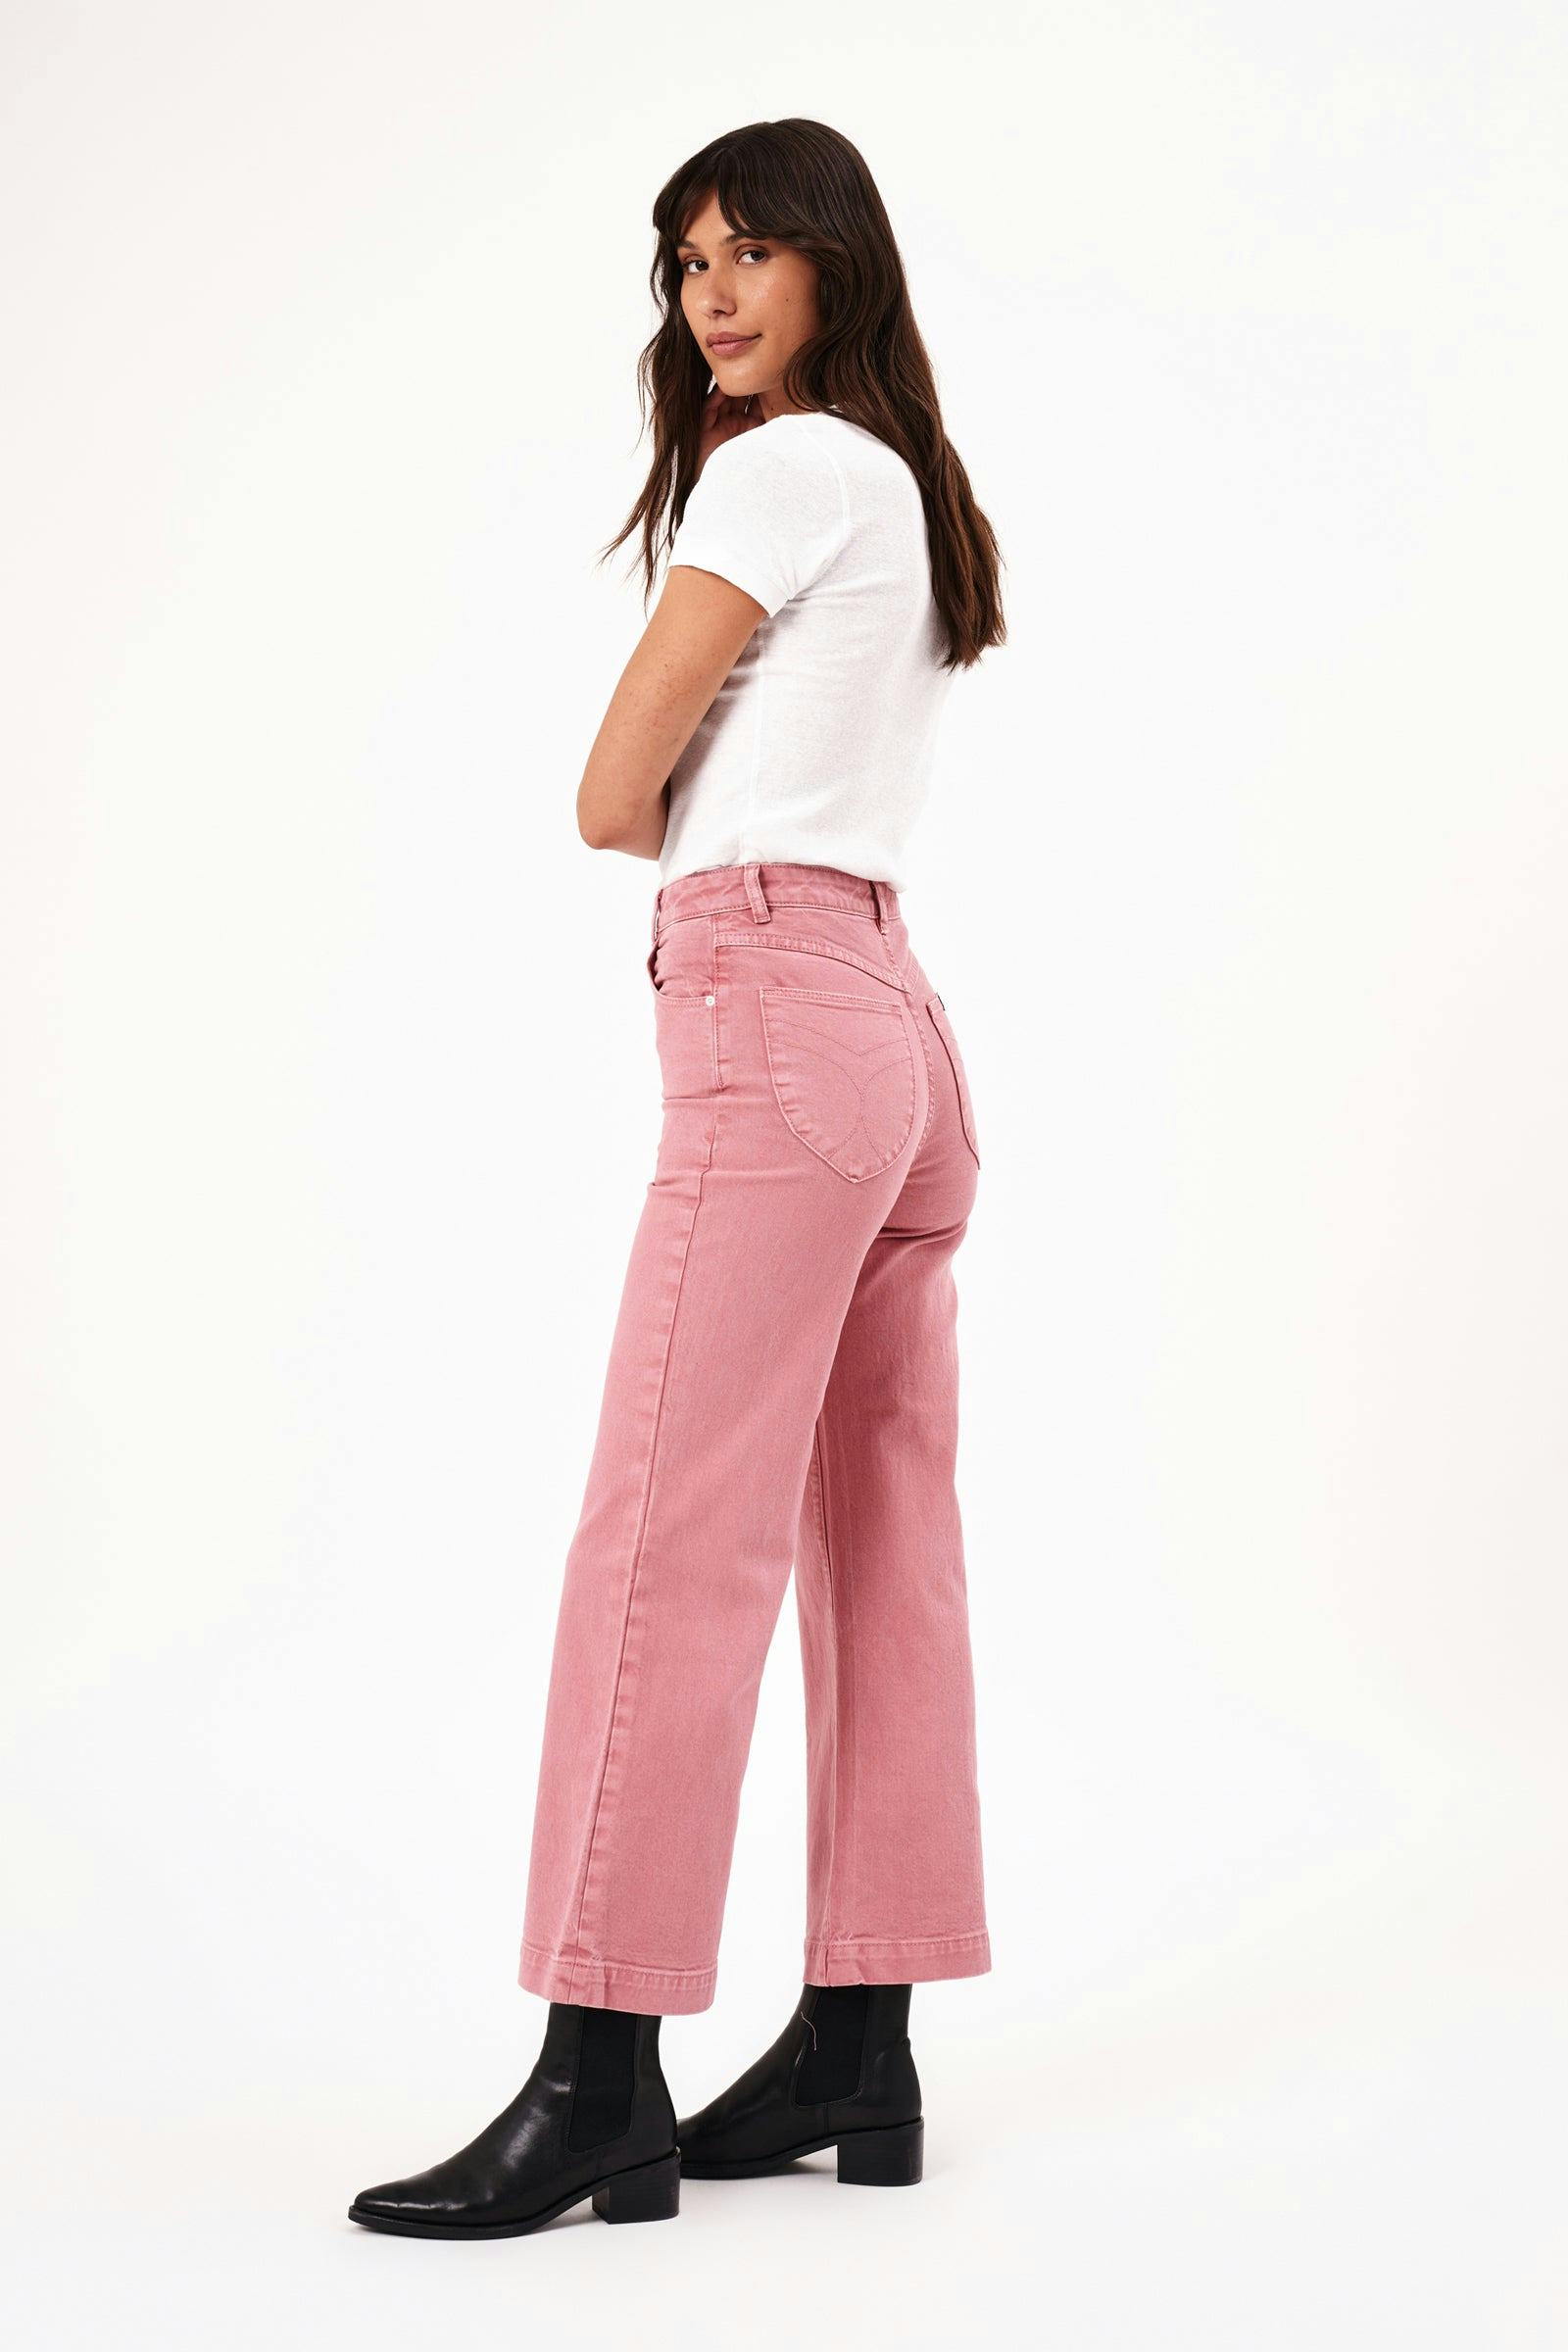 Buy Sailor Scoop - Rose Online | Rollas Jeans